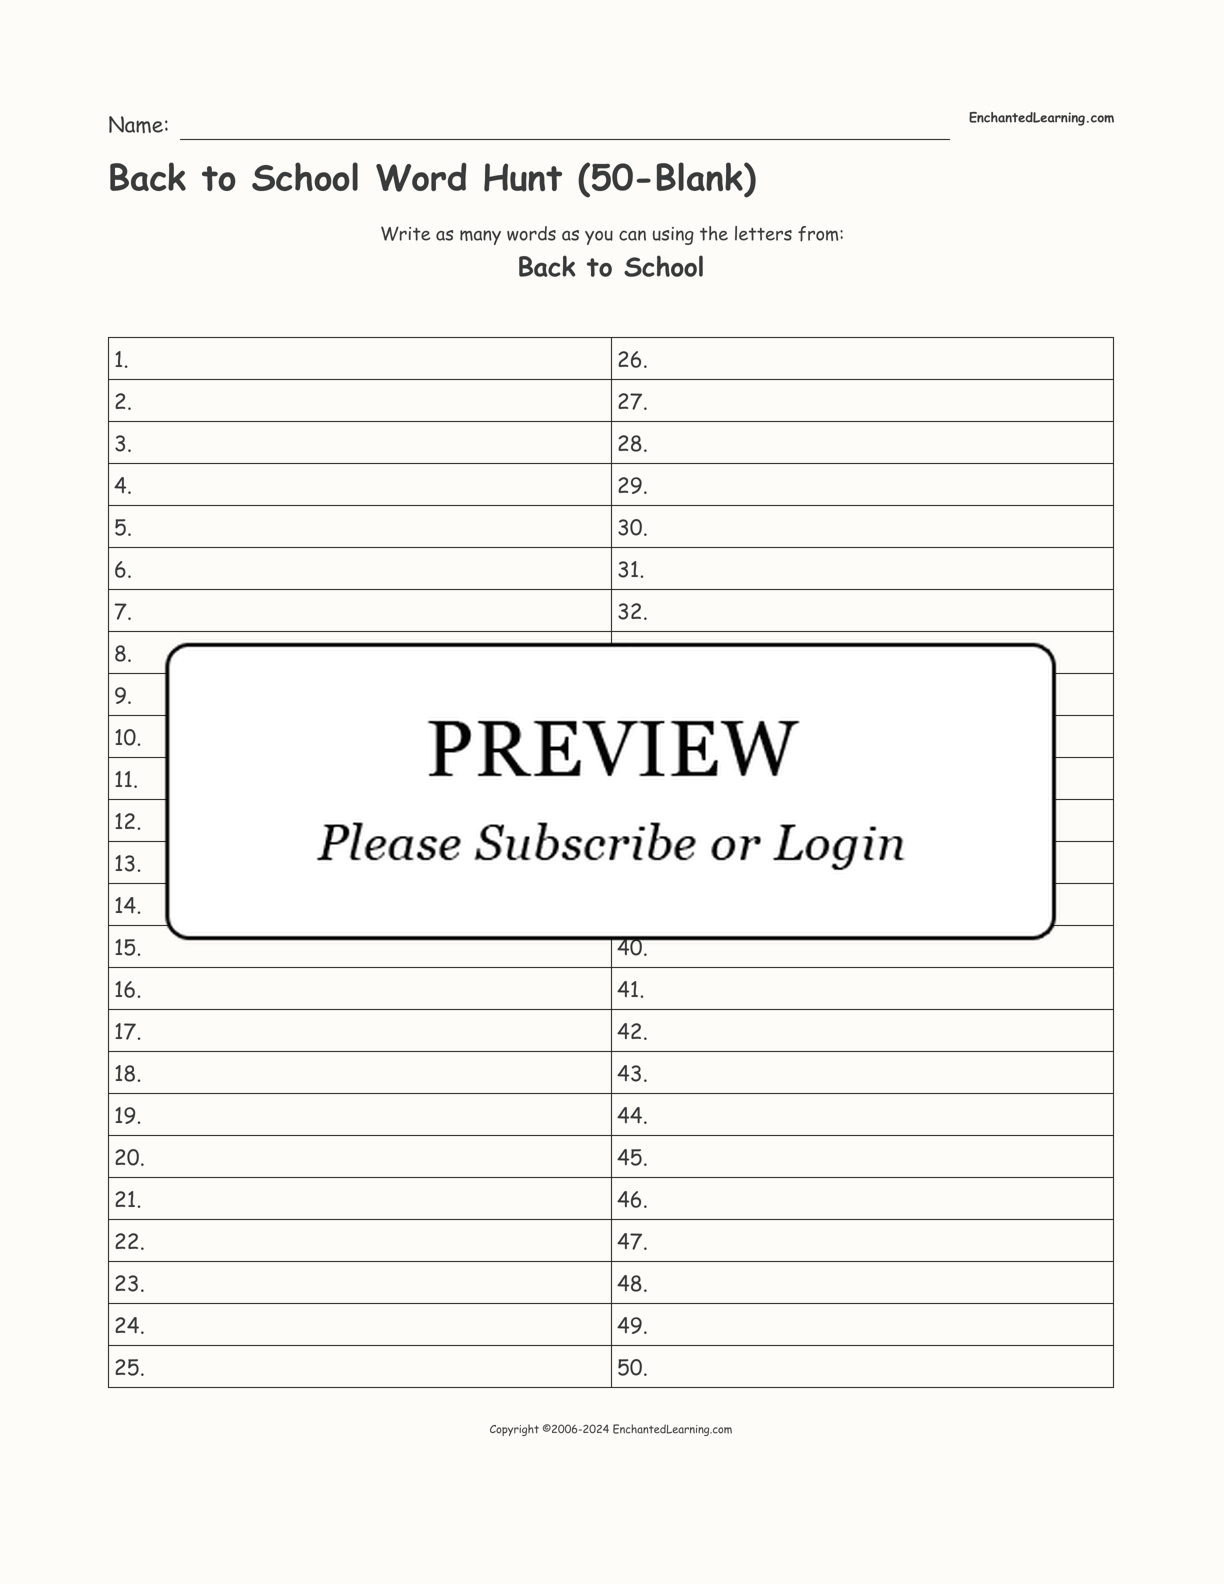 Back to School Word Hunt (50-Blank) interactive worksheet page 1